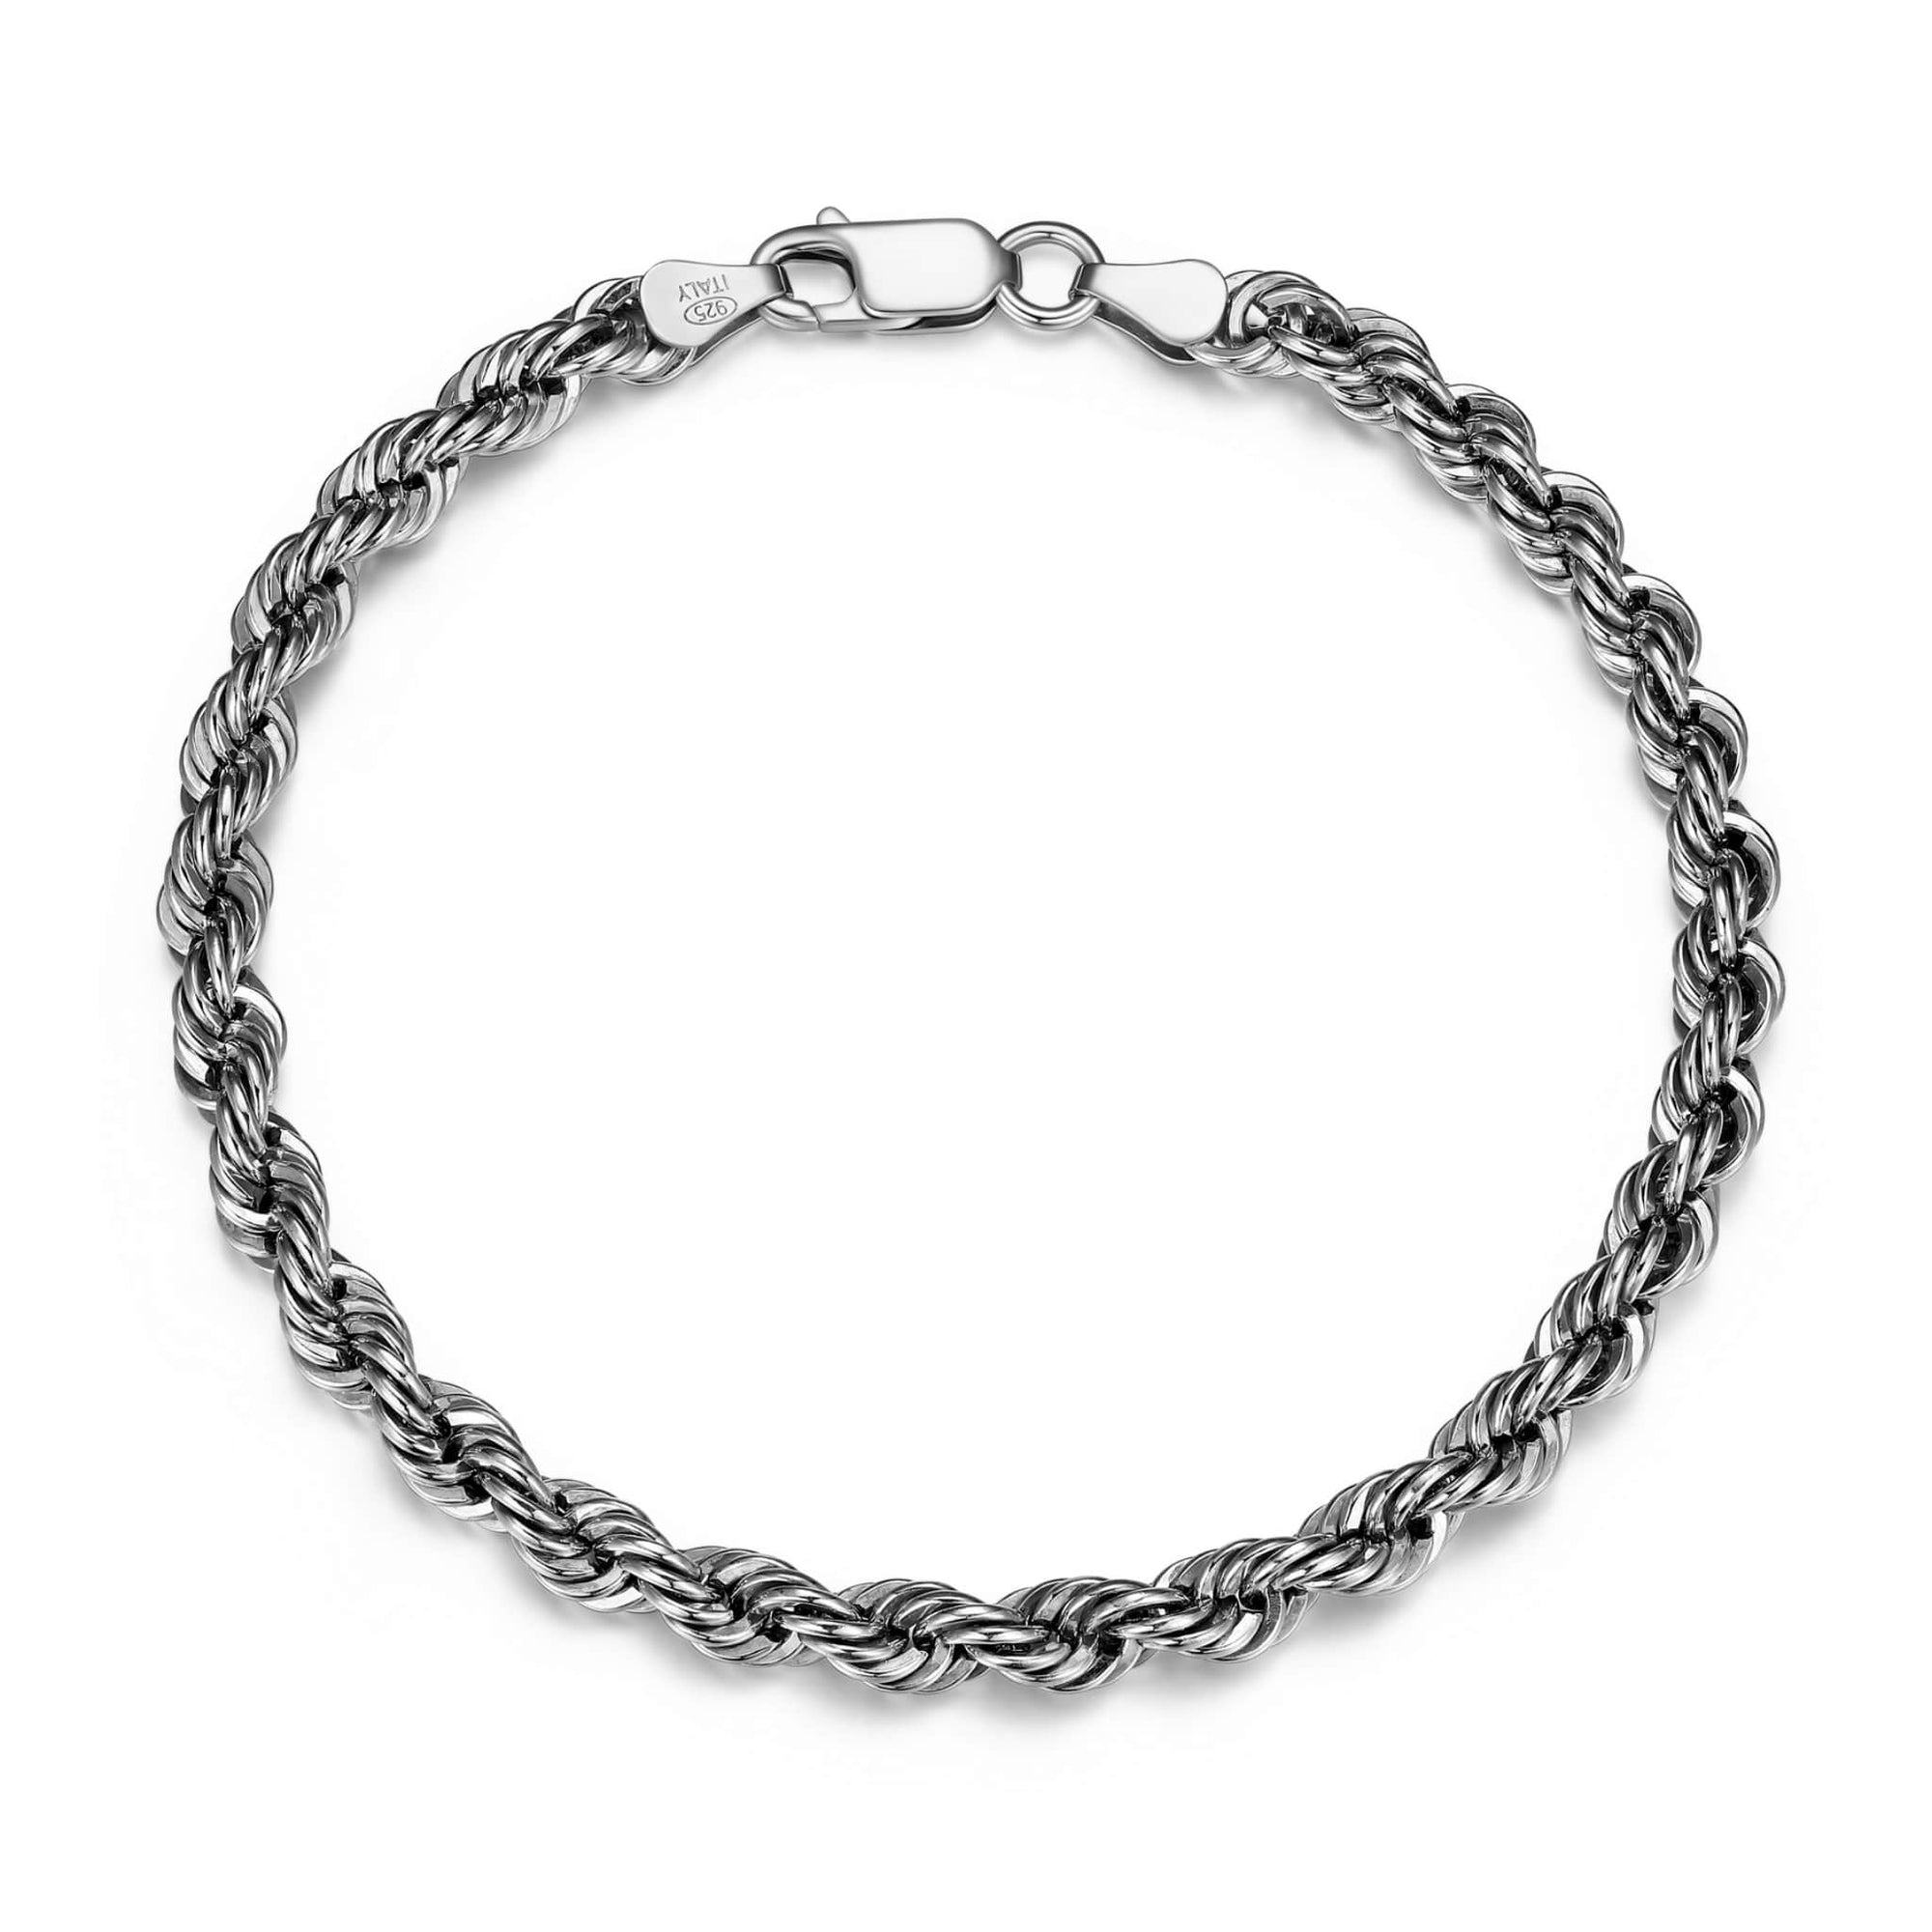 ETHOS Silver Rope Bracelet at Arman's Jewellers Kitchener